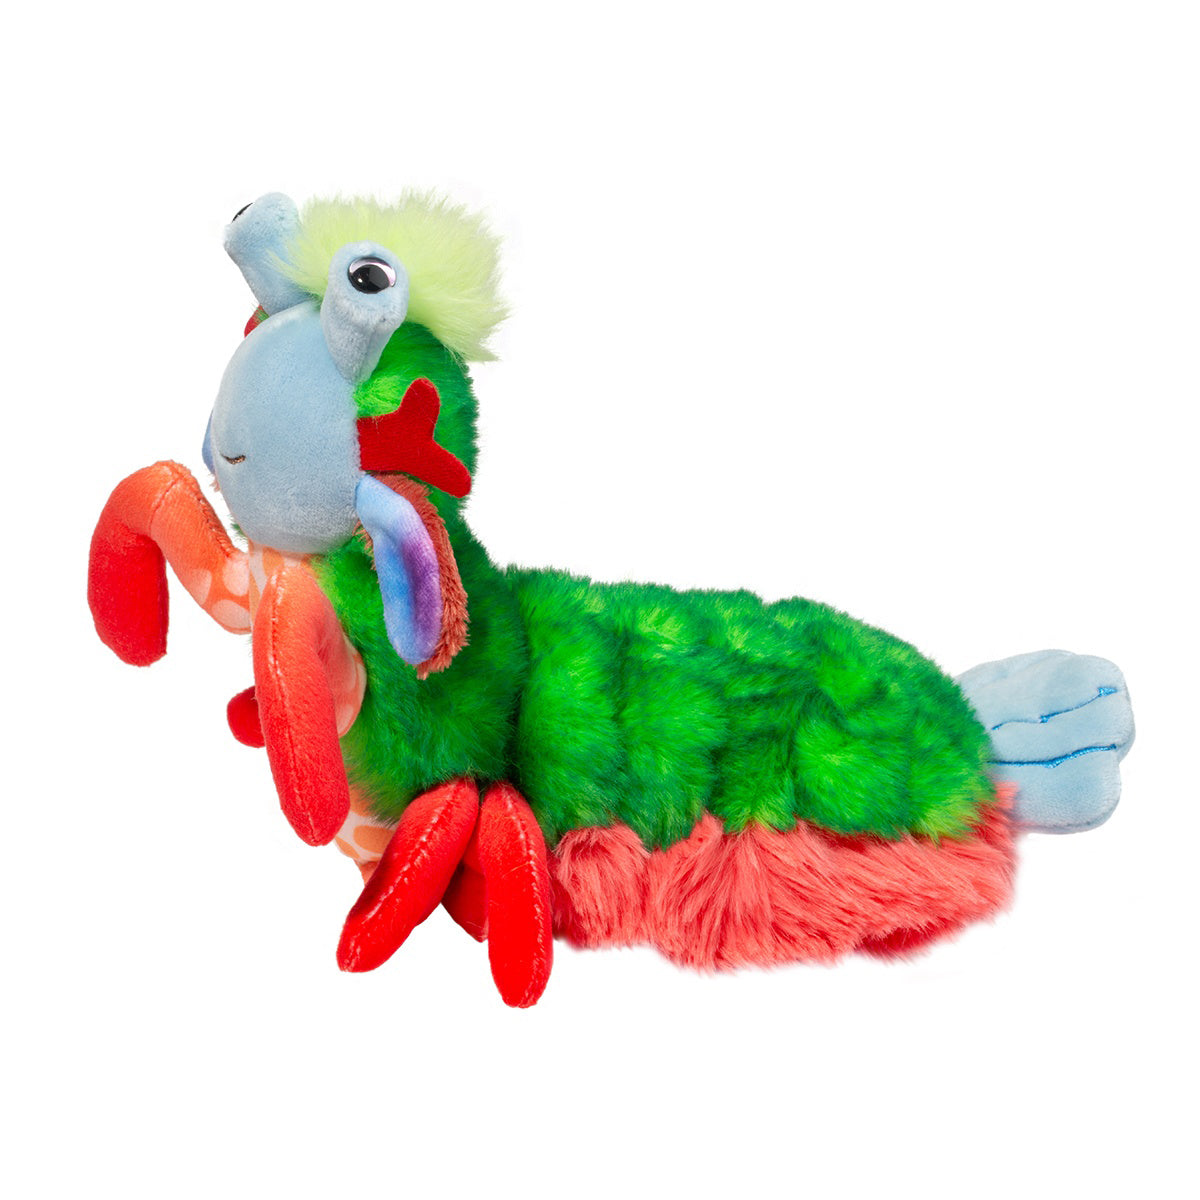 Colorful shrimp plush stuffed animal facing left